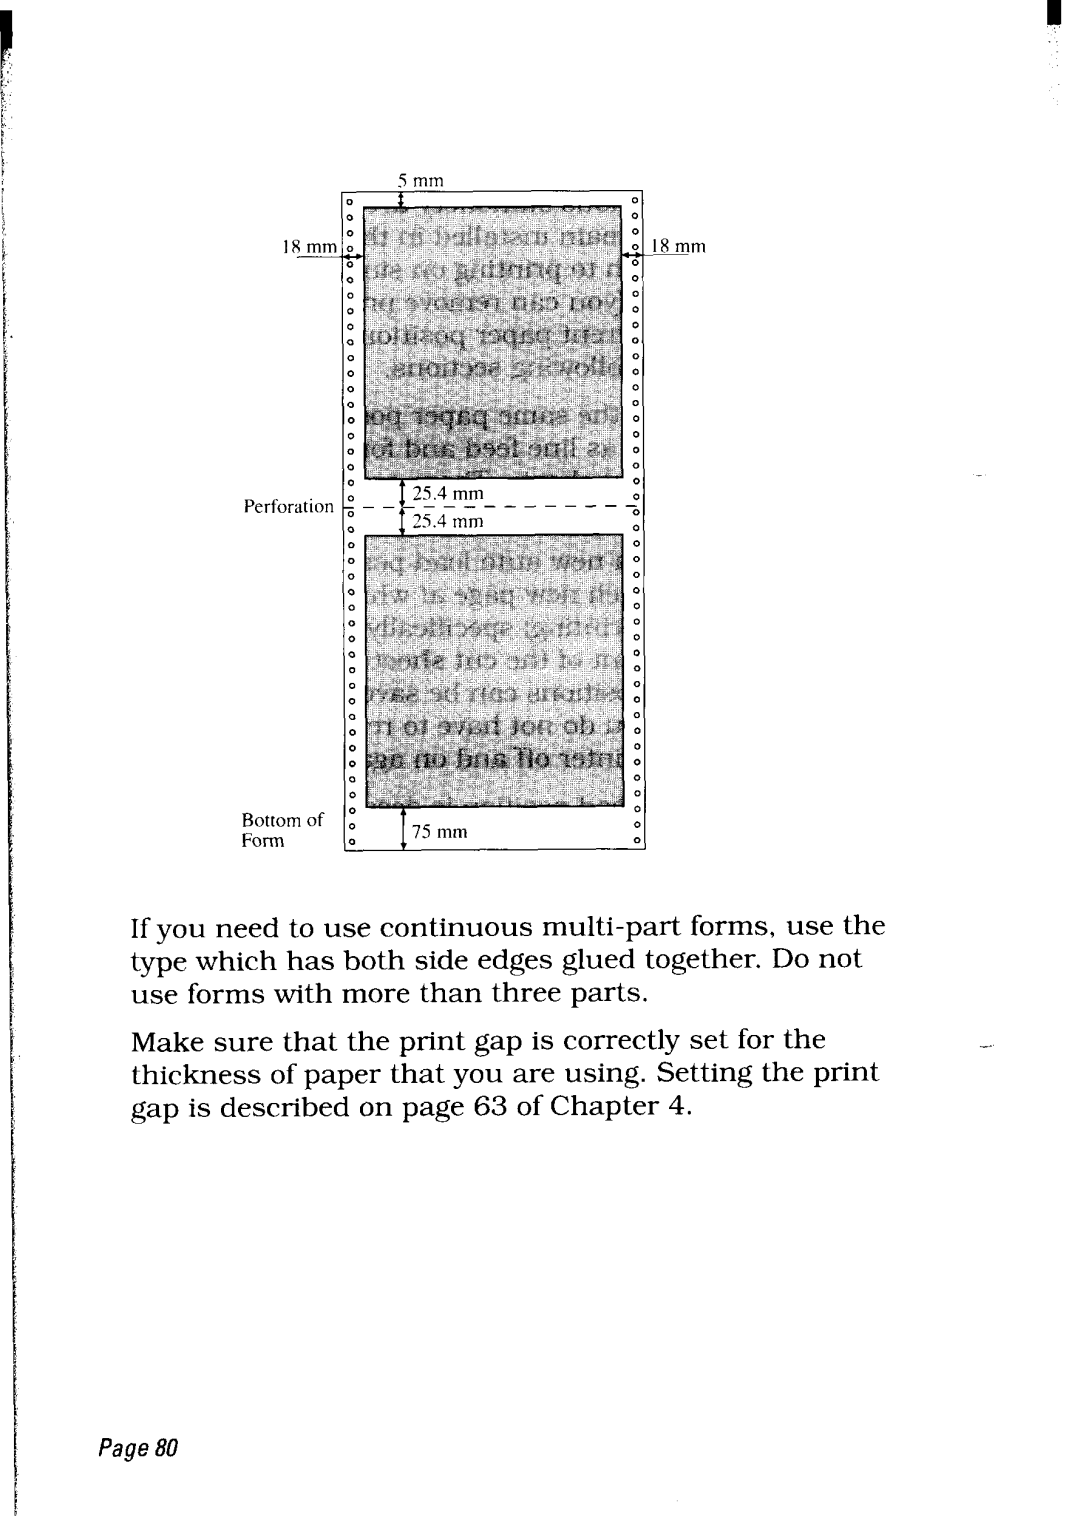 Star Micronics LC24-30 user manual Page80 